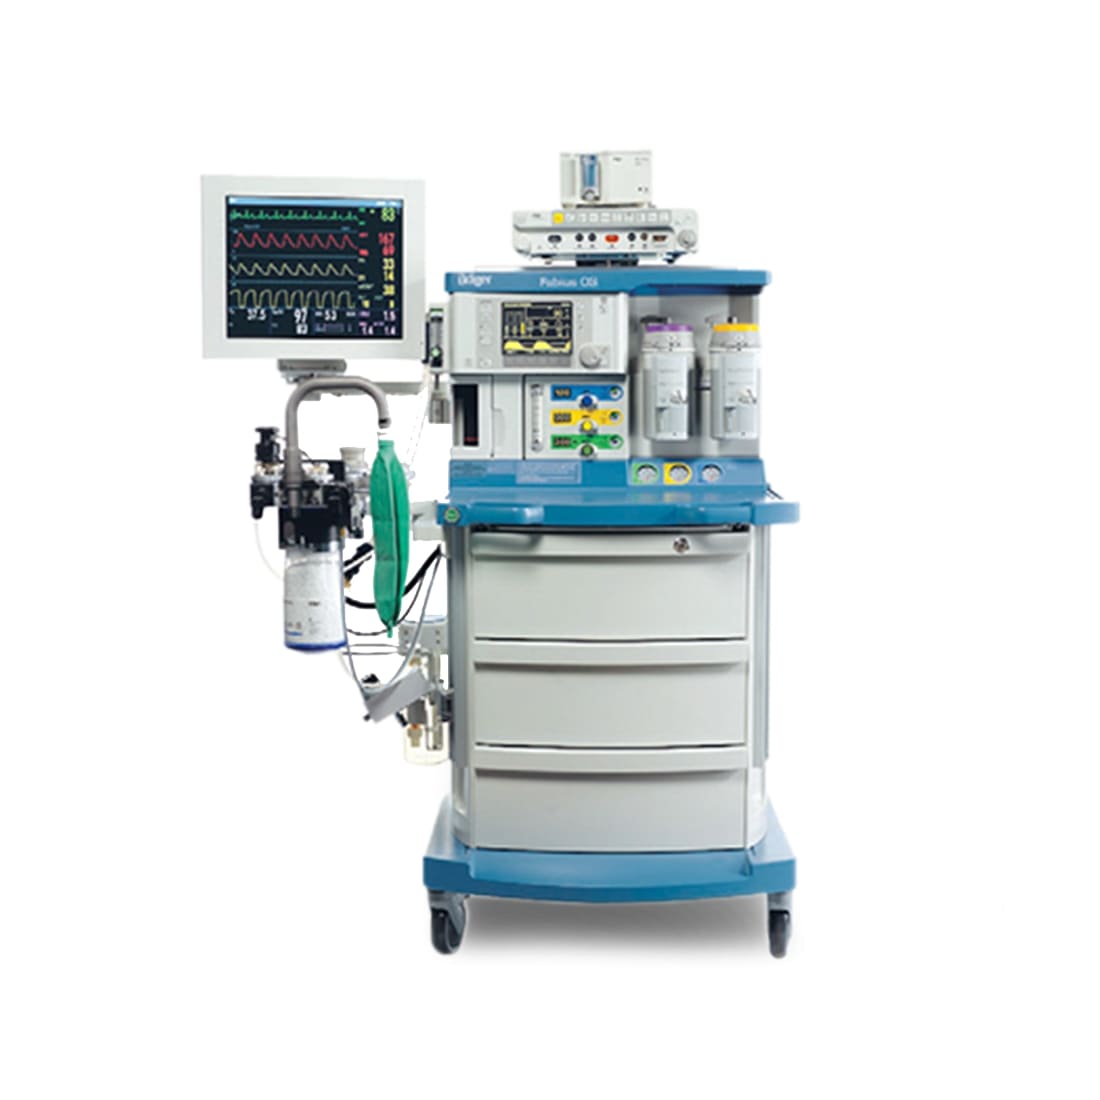 Drager Fabius OS Anesthesia Machine